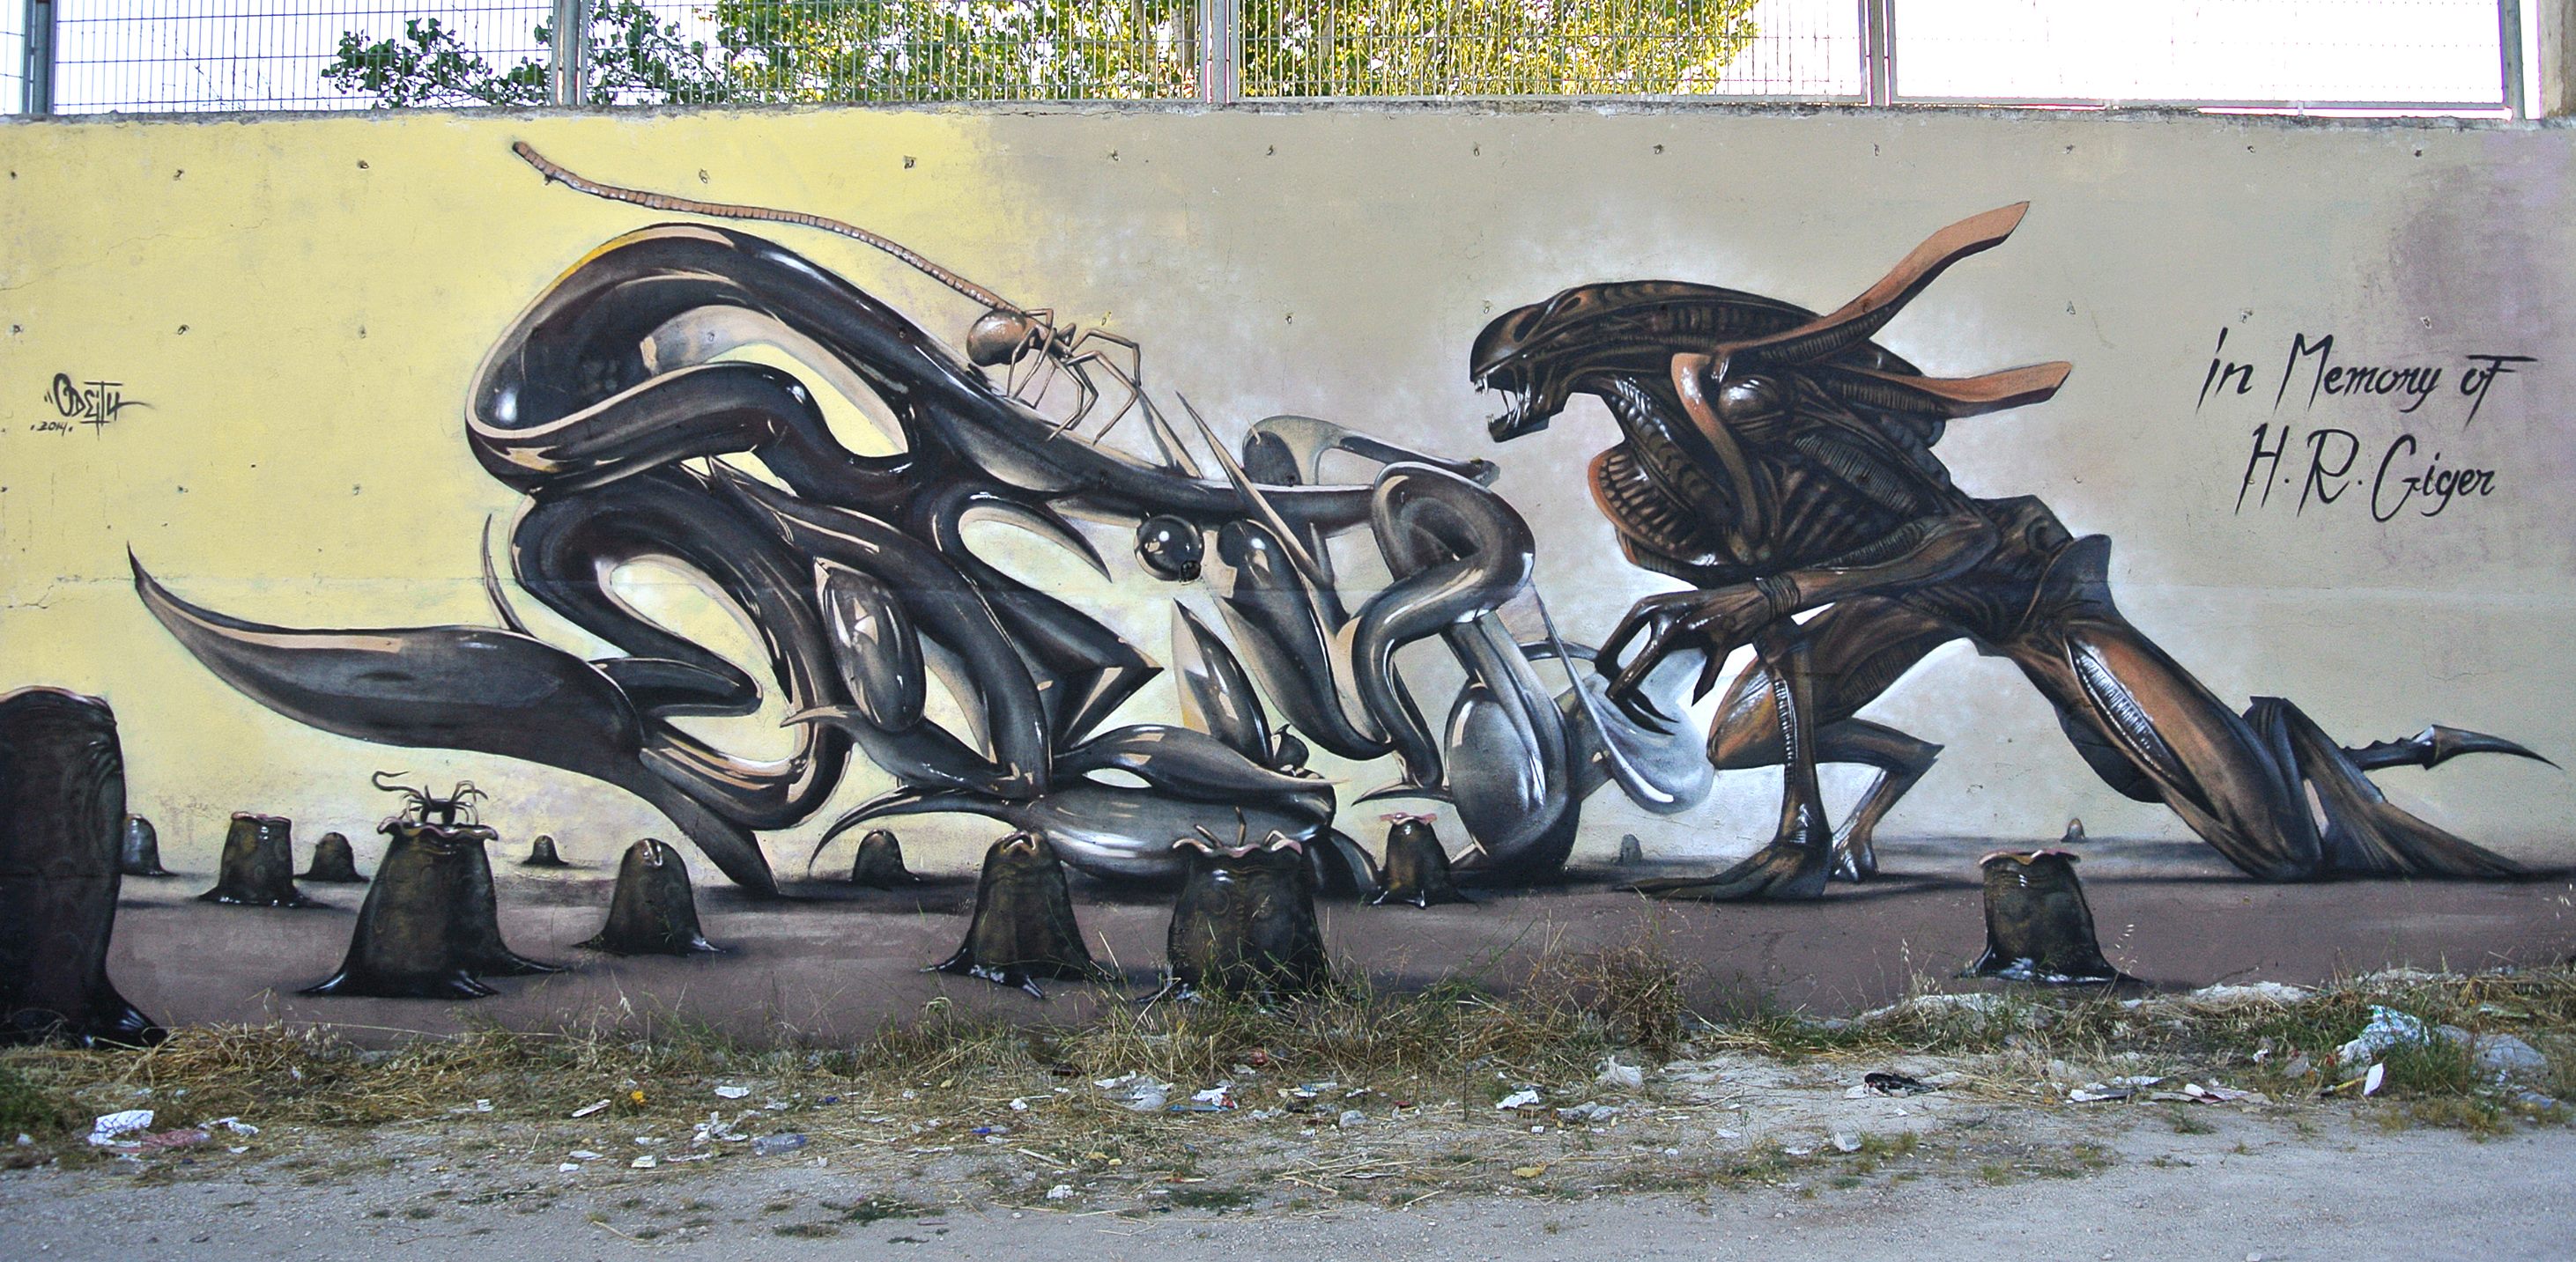 odeith-hr-giger-graffiti